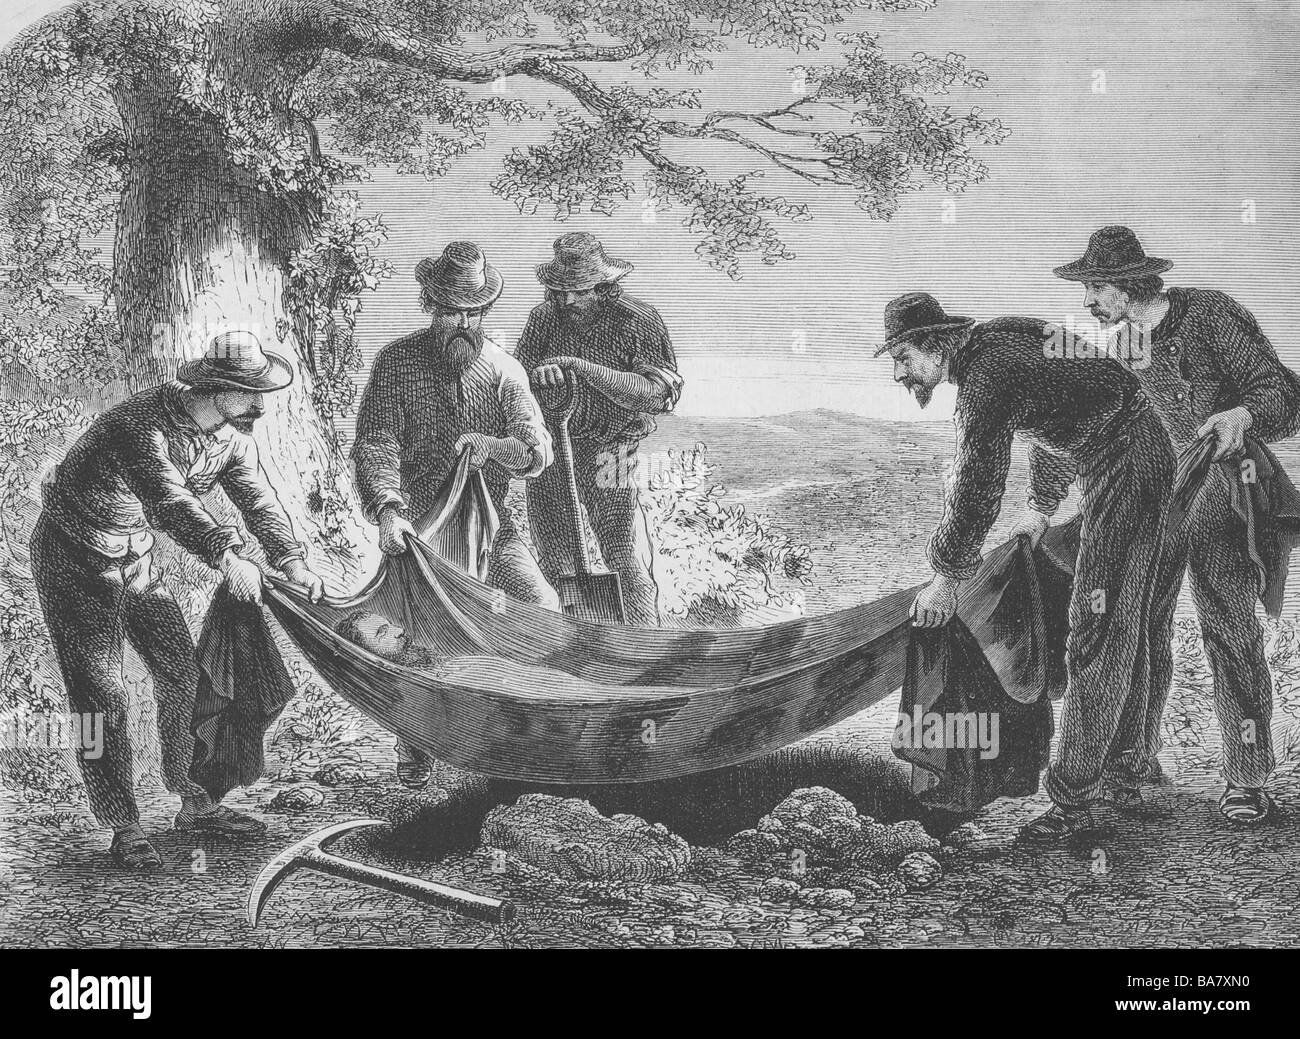 Burke, Robert O'Hara, 1821 - 28.6.1861, explorateur irlandais, son inhumation, Australie, XIXe siècle, Banque D'Images